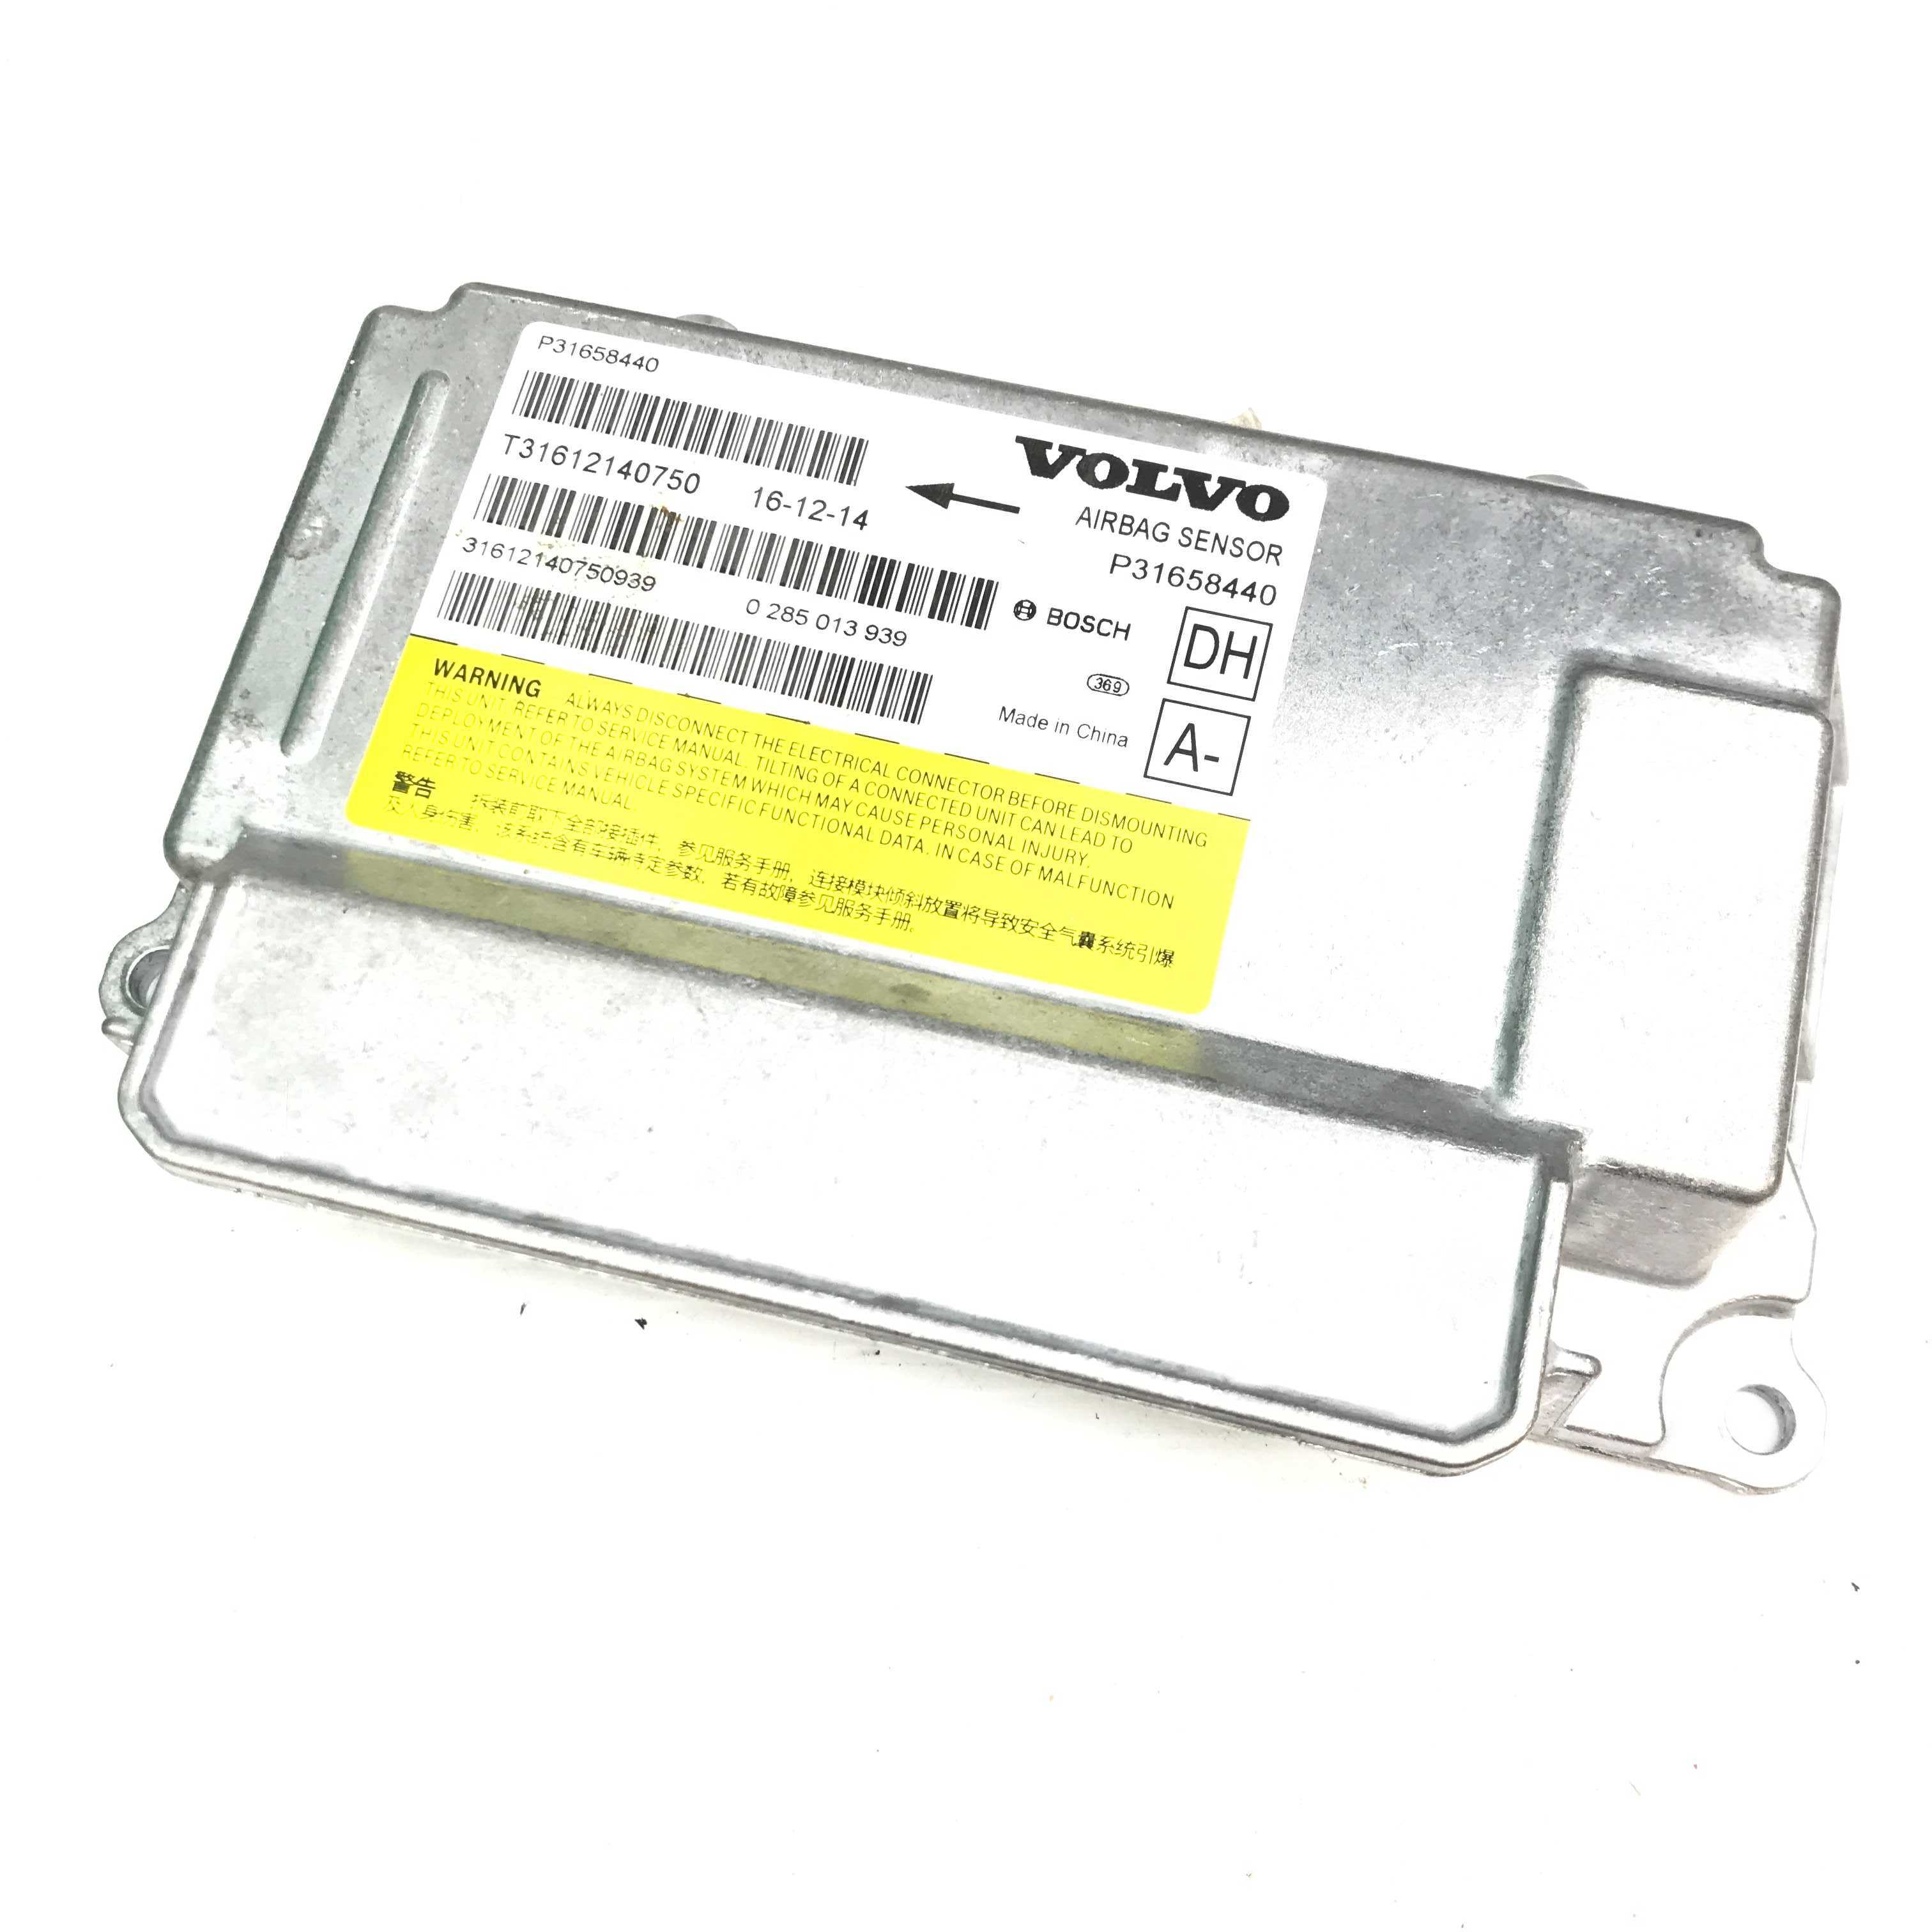 VOLVO XC60 SRS Airbag Computer Diagnostic Control Module PART #P31658440